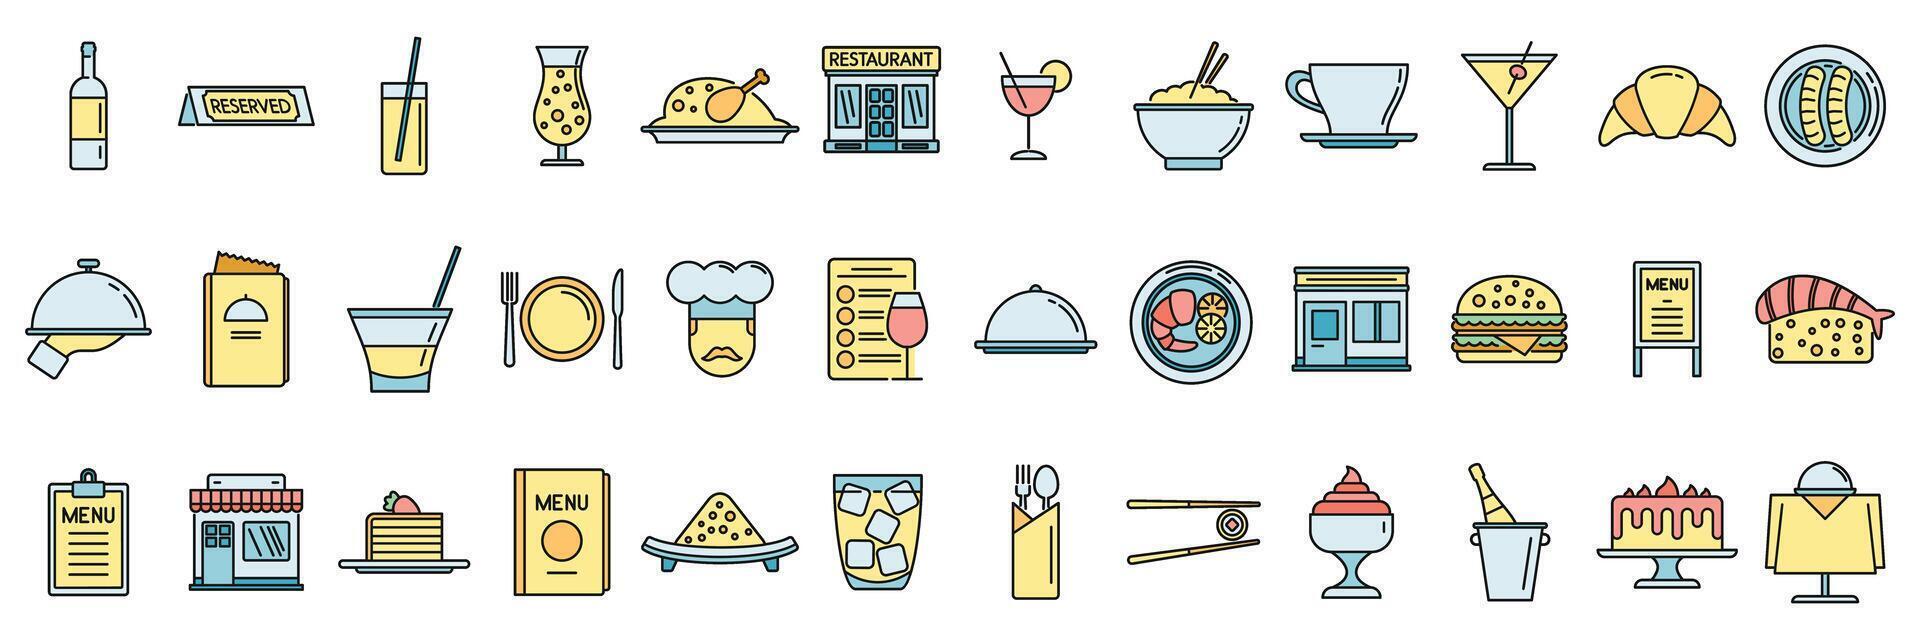 Restaurant icons set vector color